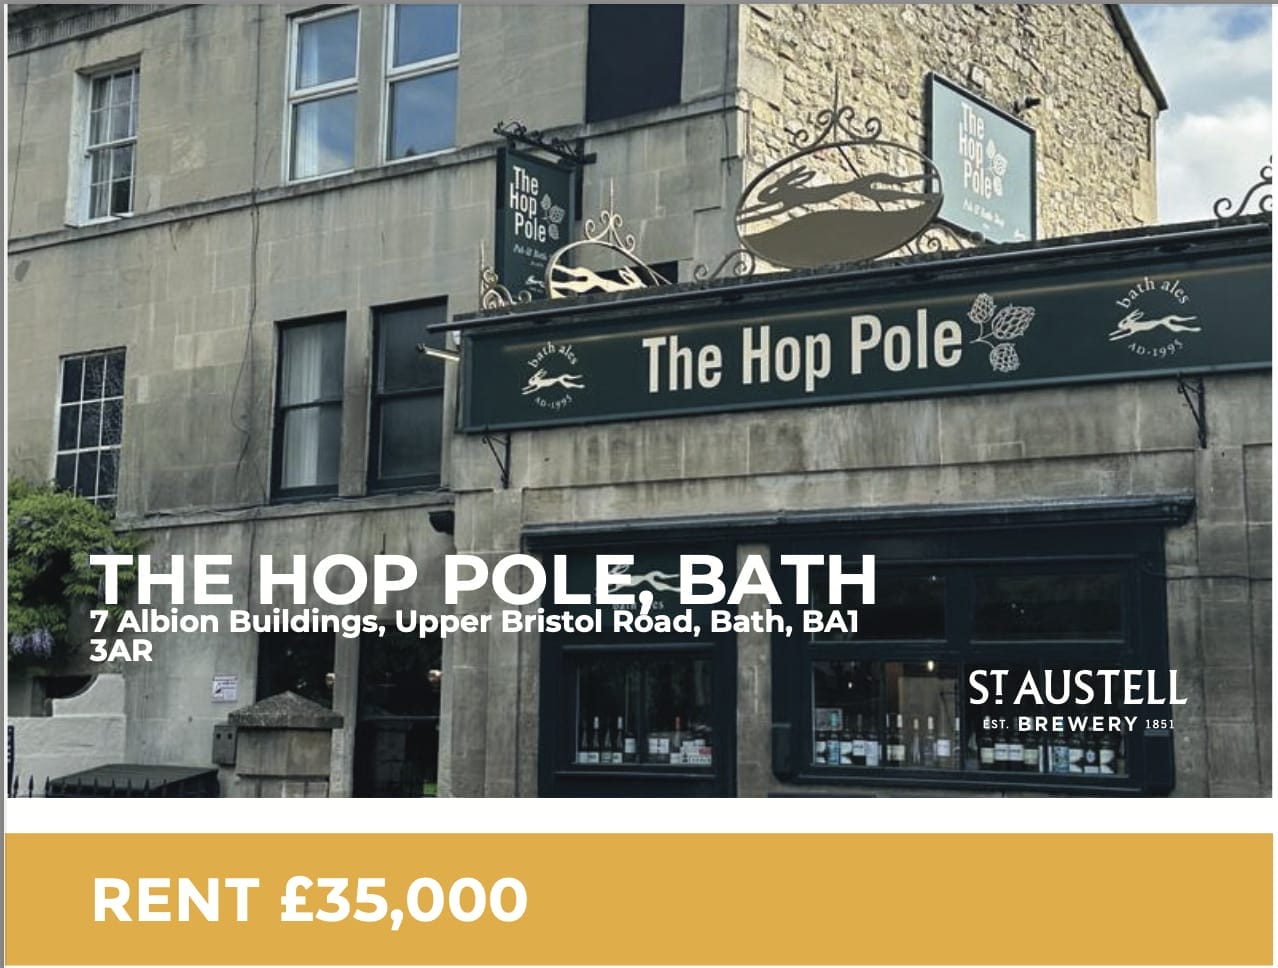 Let A Pub In Bath - Run The Hop Pole !